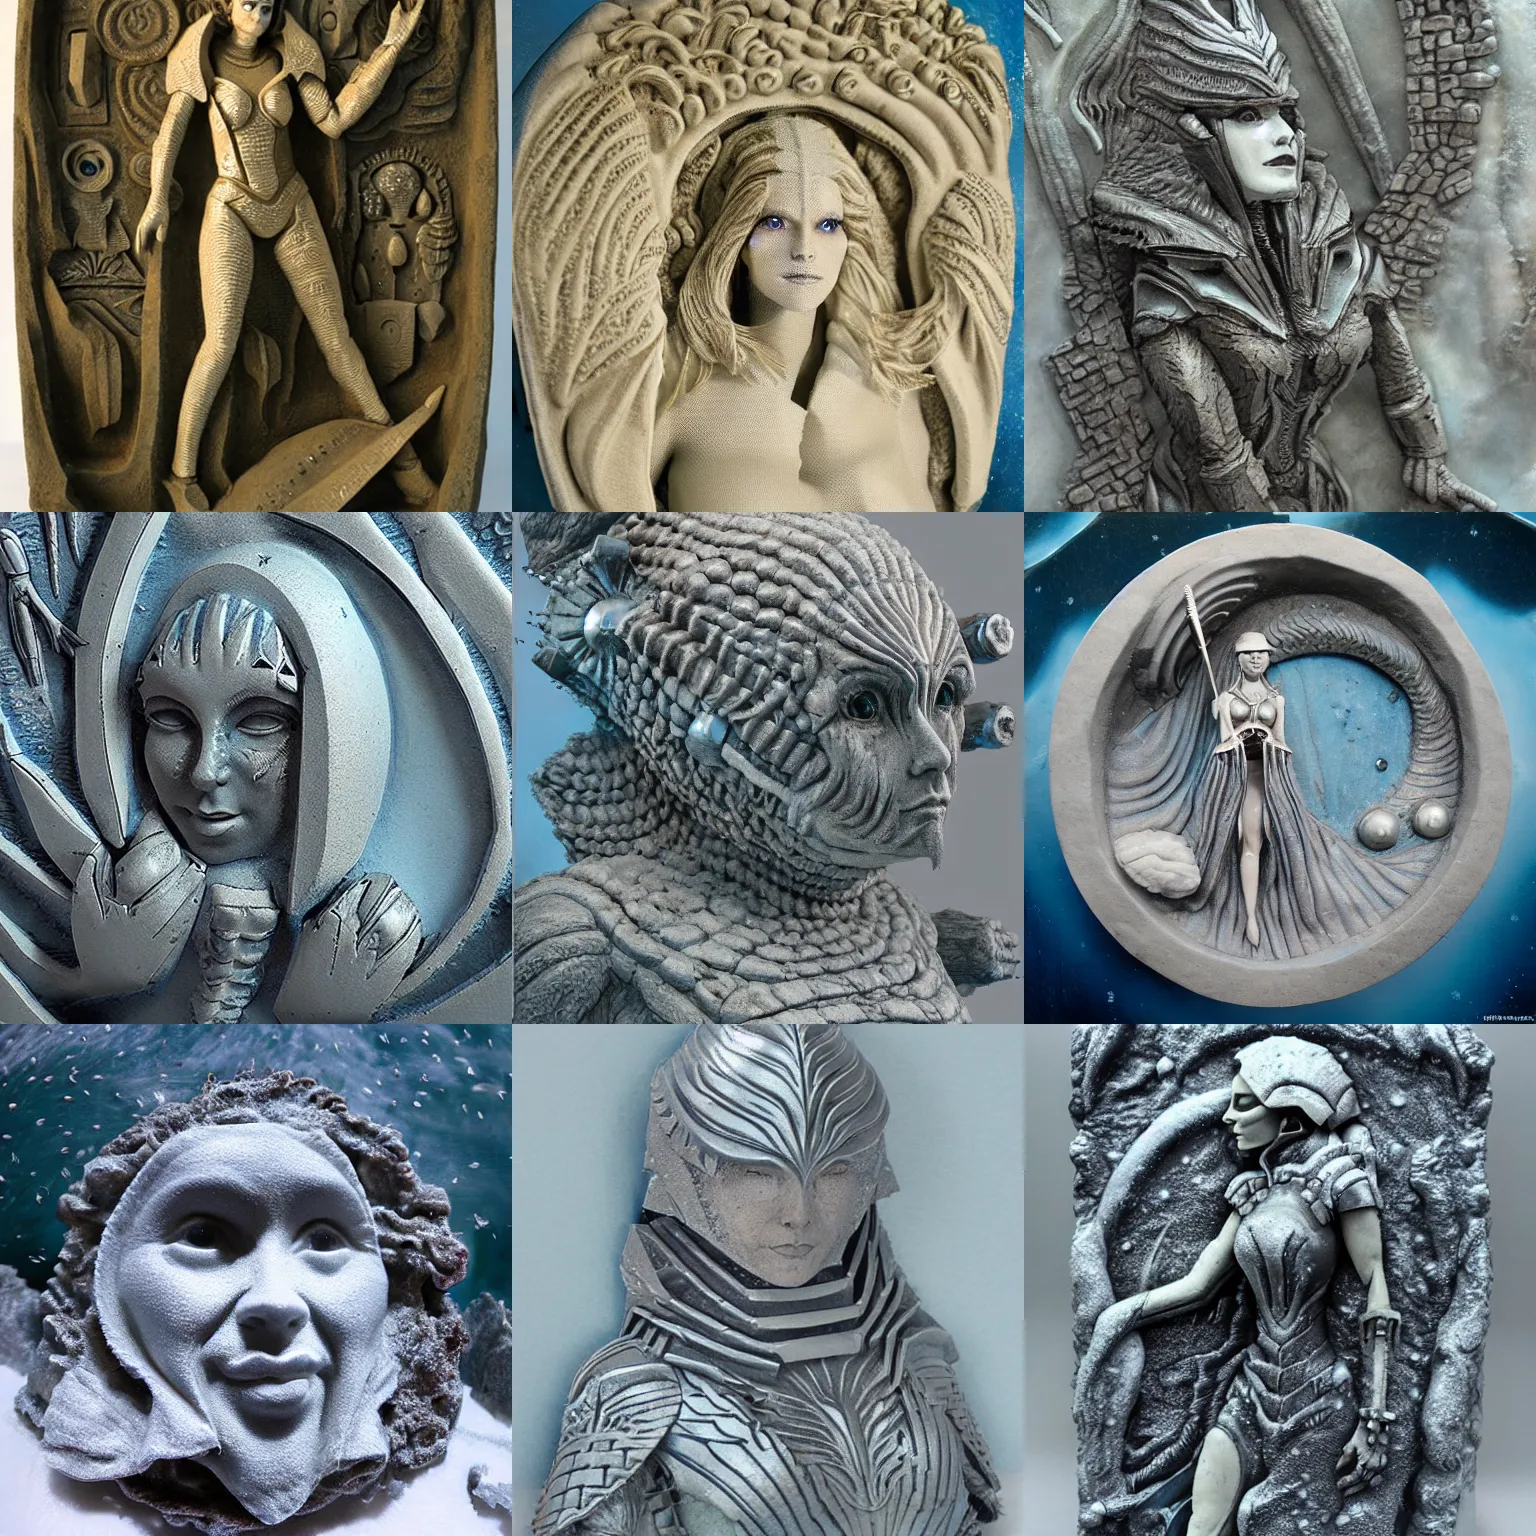 Prompt: snow queen in ancient alien planet sci - fi bathyscaphe armor, low - relief sculpture scene, highly detailed